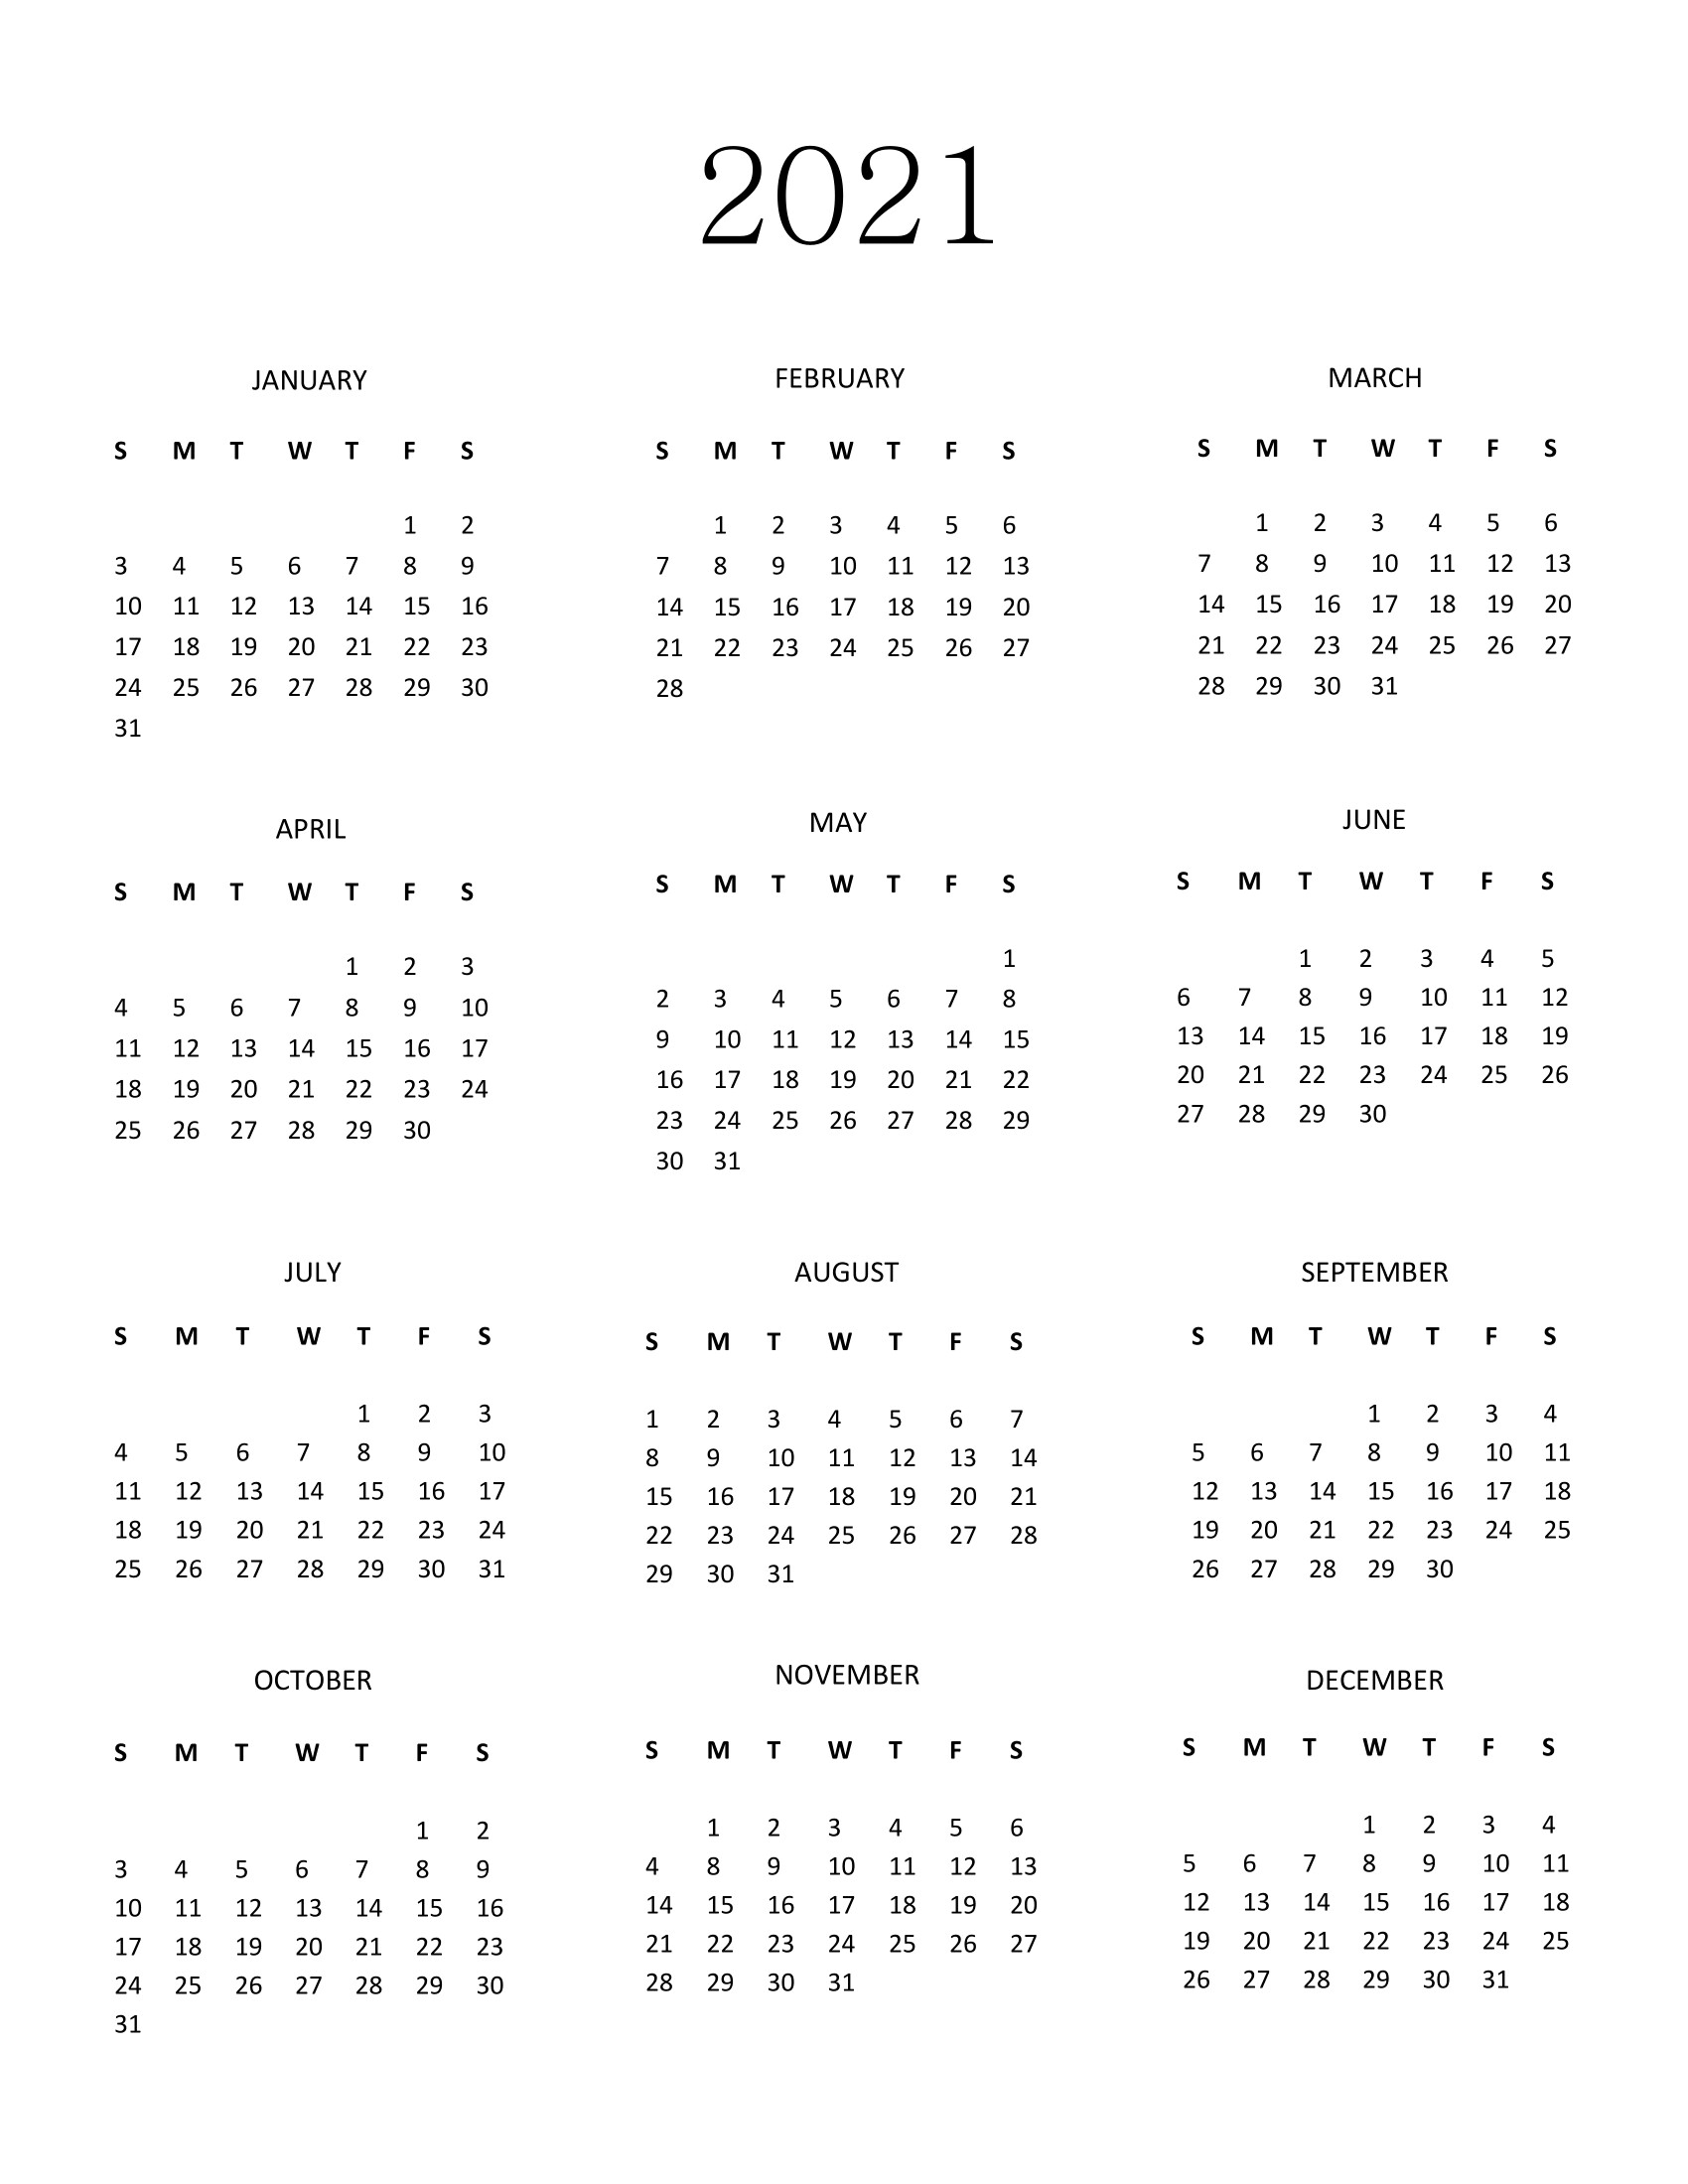 ArtStation - 2021 Simple Calendar Design